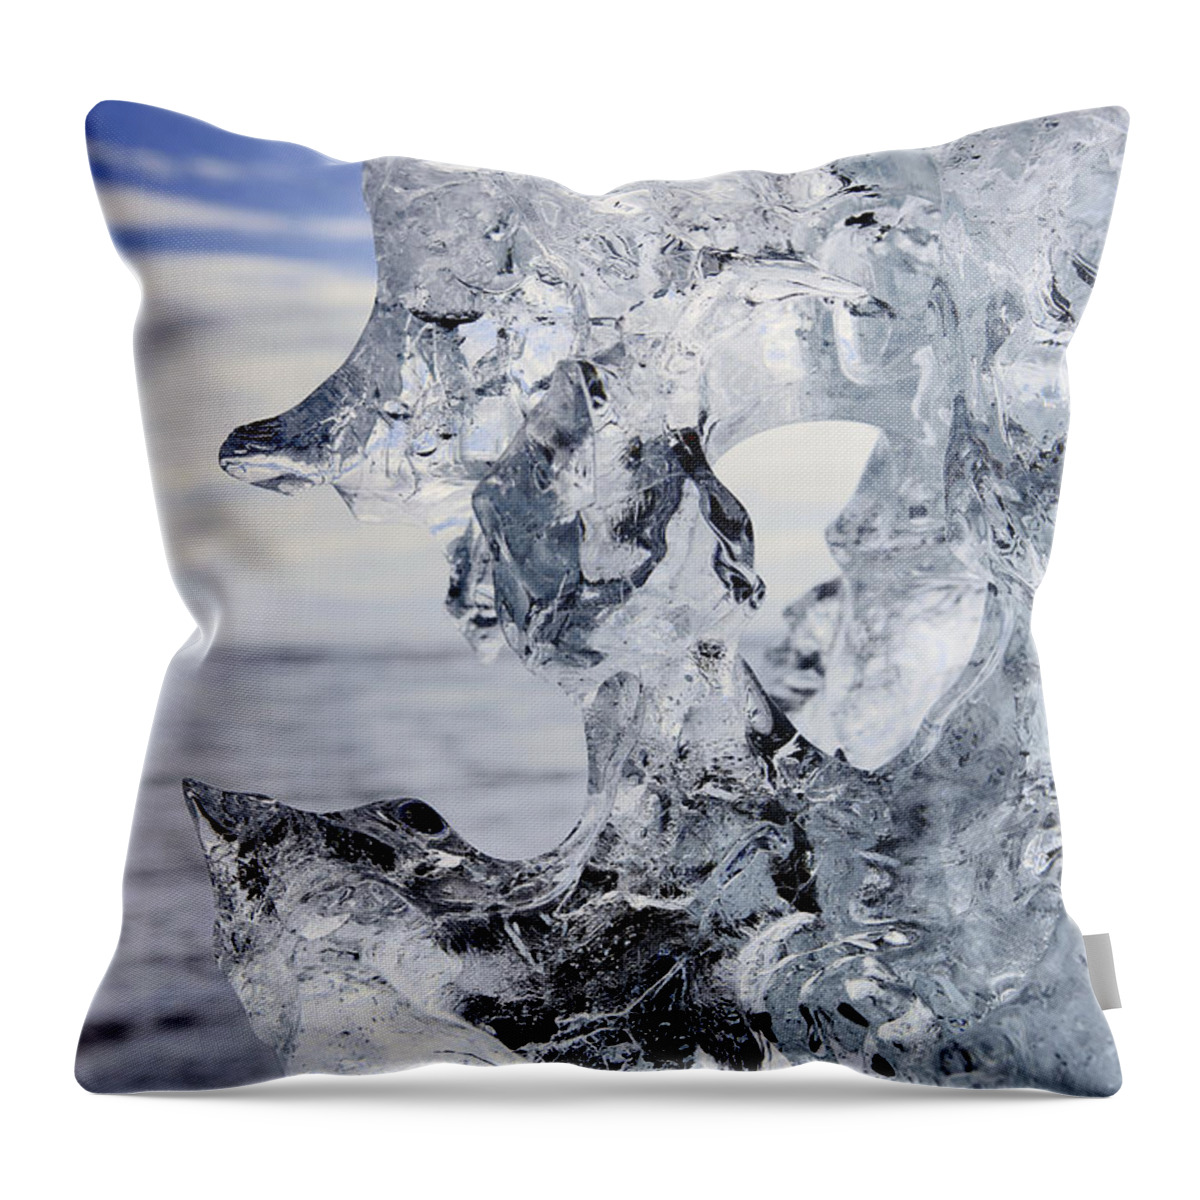 Beach Throw Pillow featuring the photograph Glacier Ice On Beach by E.r. Degginger